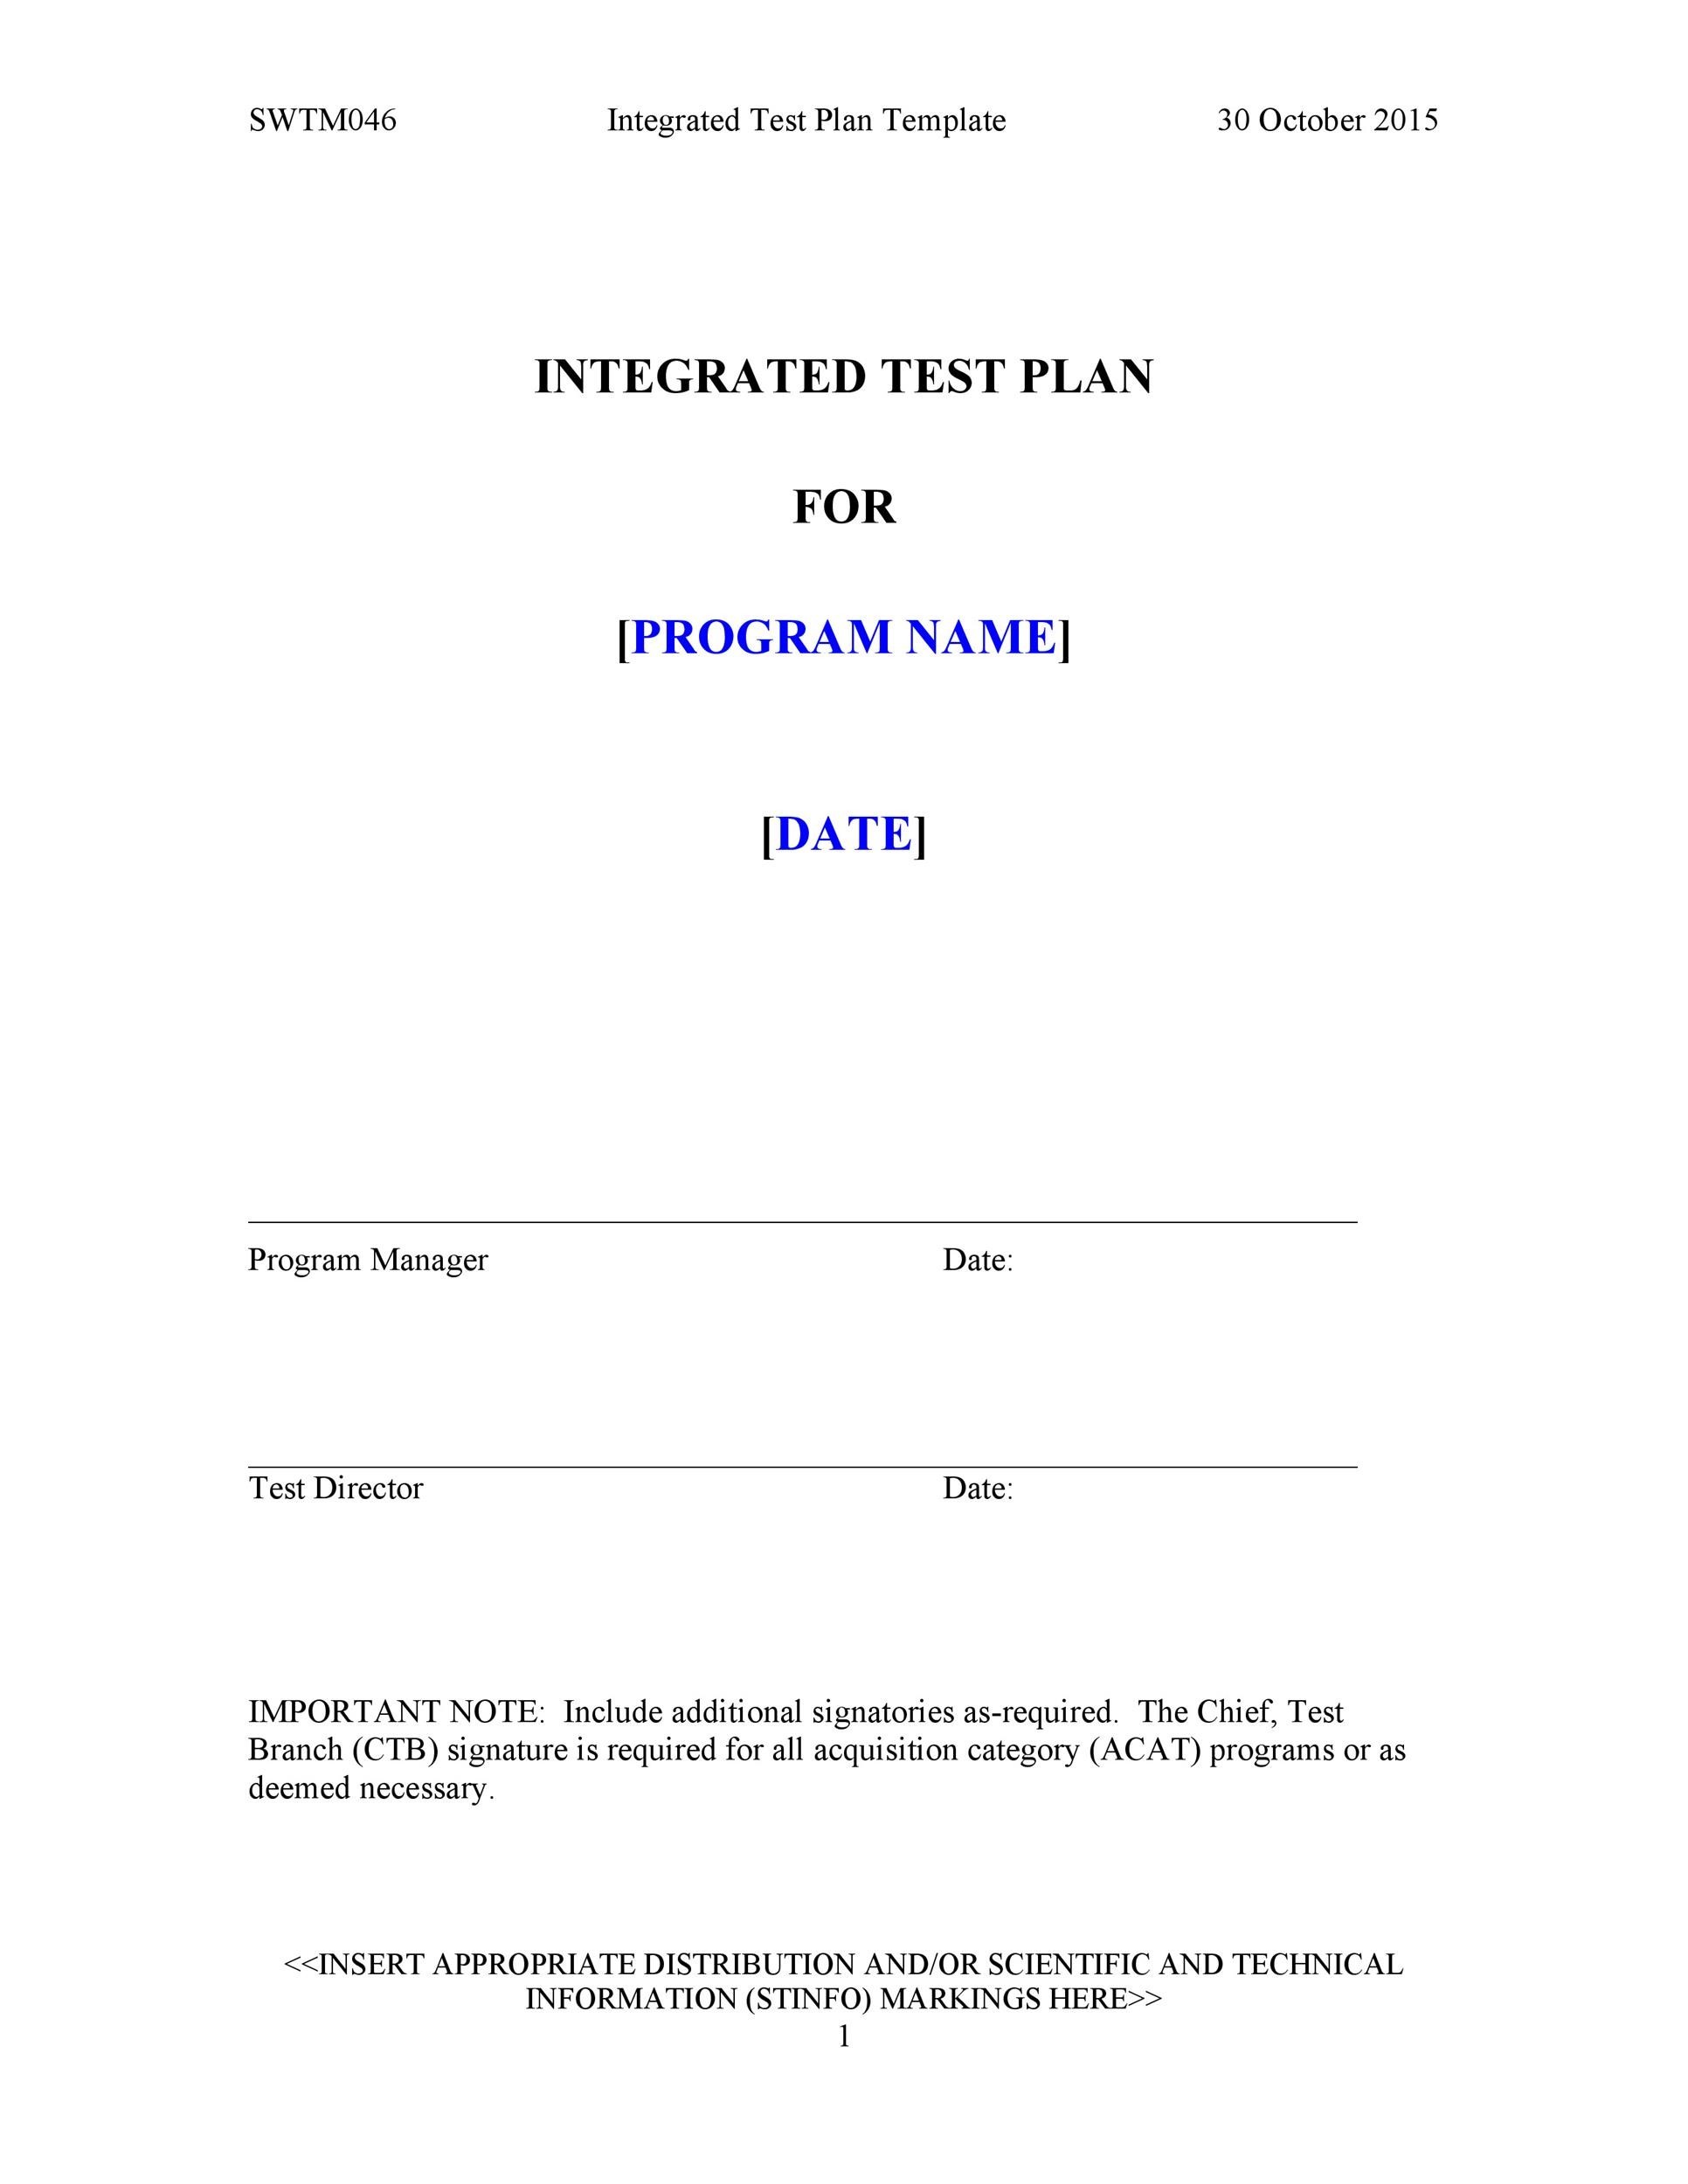 Free Test Plan Template 30